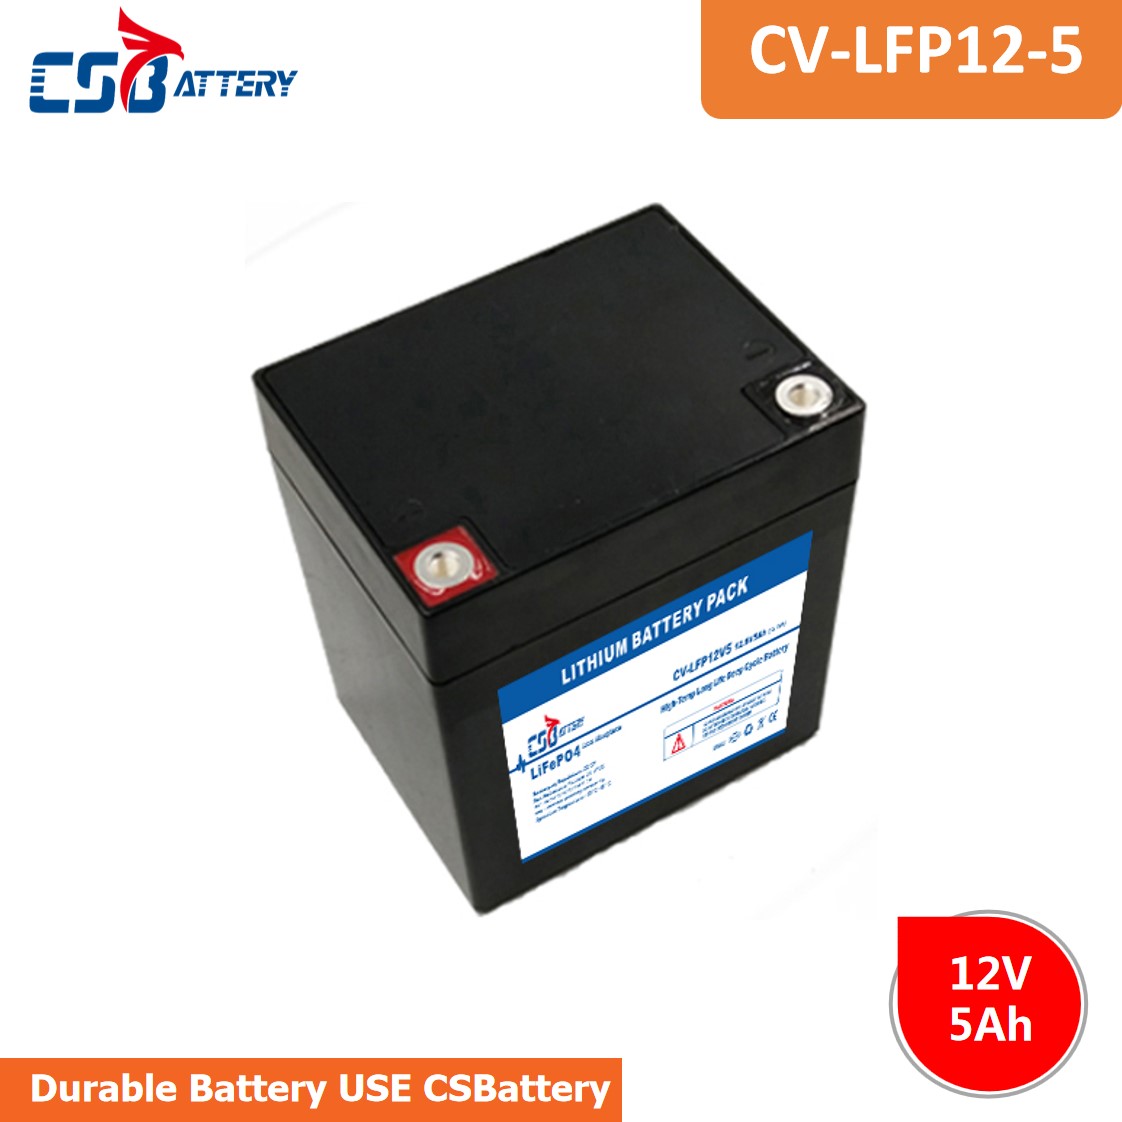 Lithium Iron Phosphate (LiFePO4) Batteries